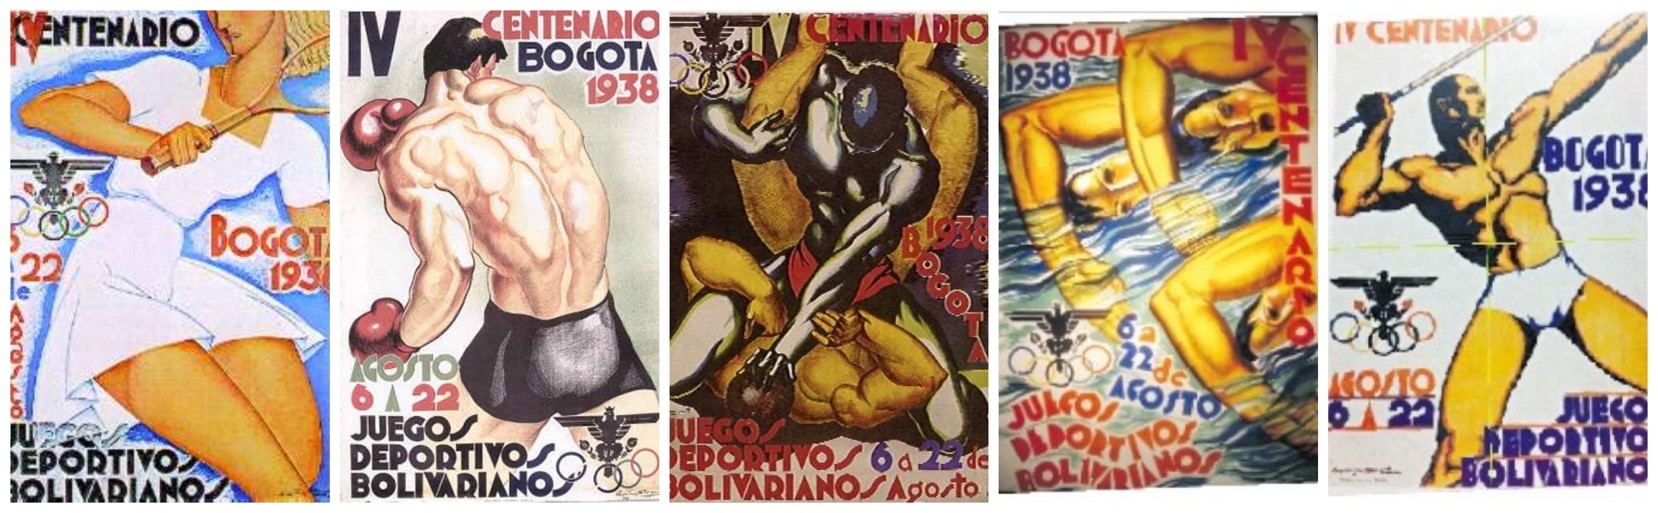 Afiches Juegos Bolivarianos de Bogotá en 1938 por Santiago Trujillo